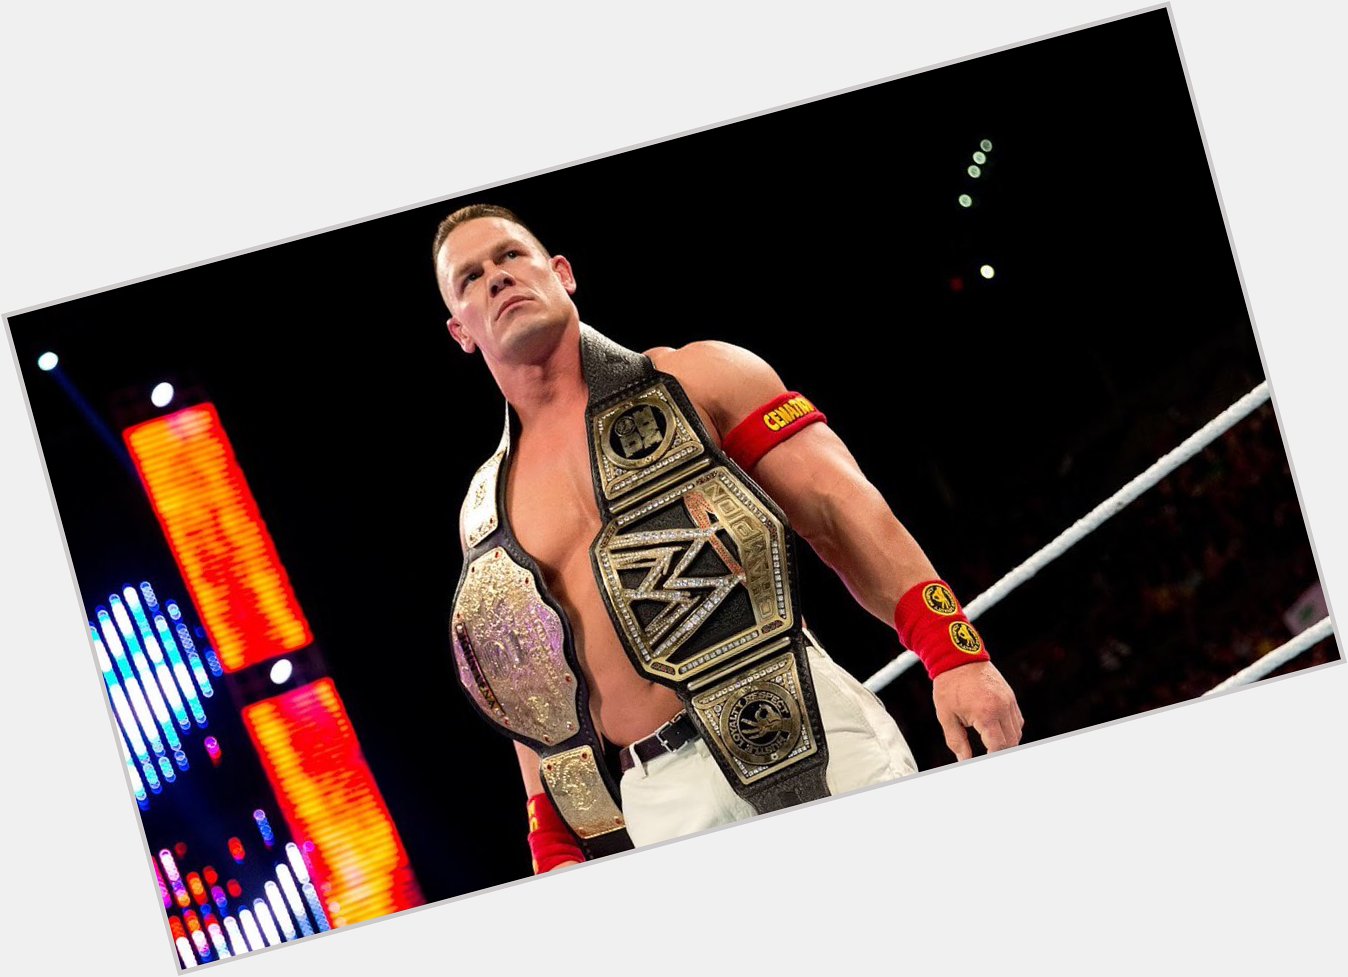 Happy birthday 16 Times World Champion
John Cena    